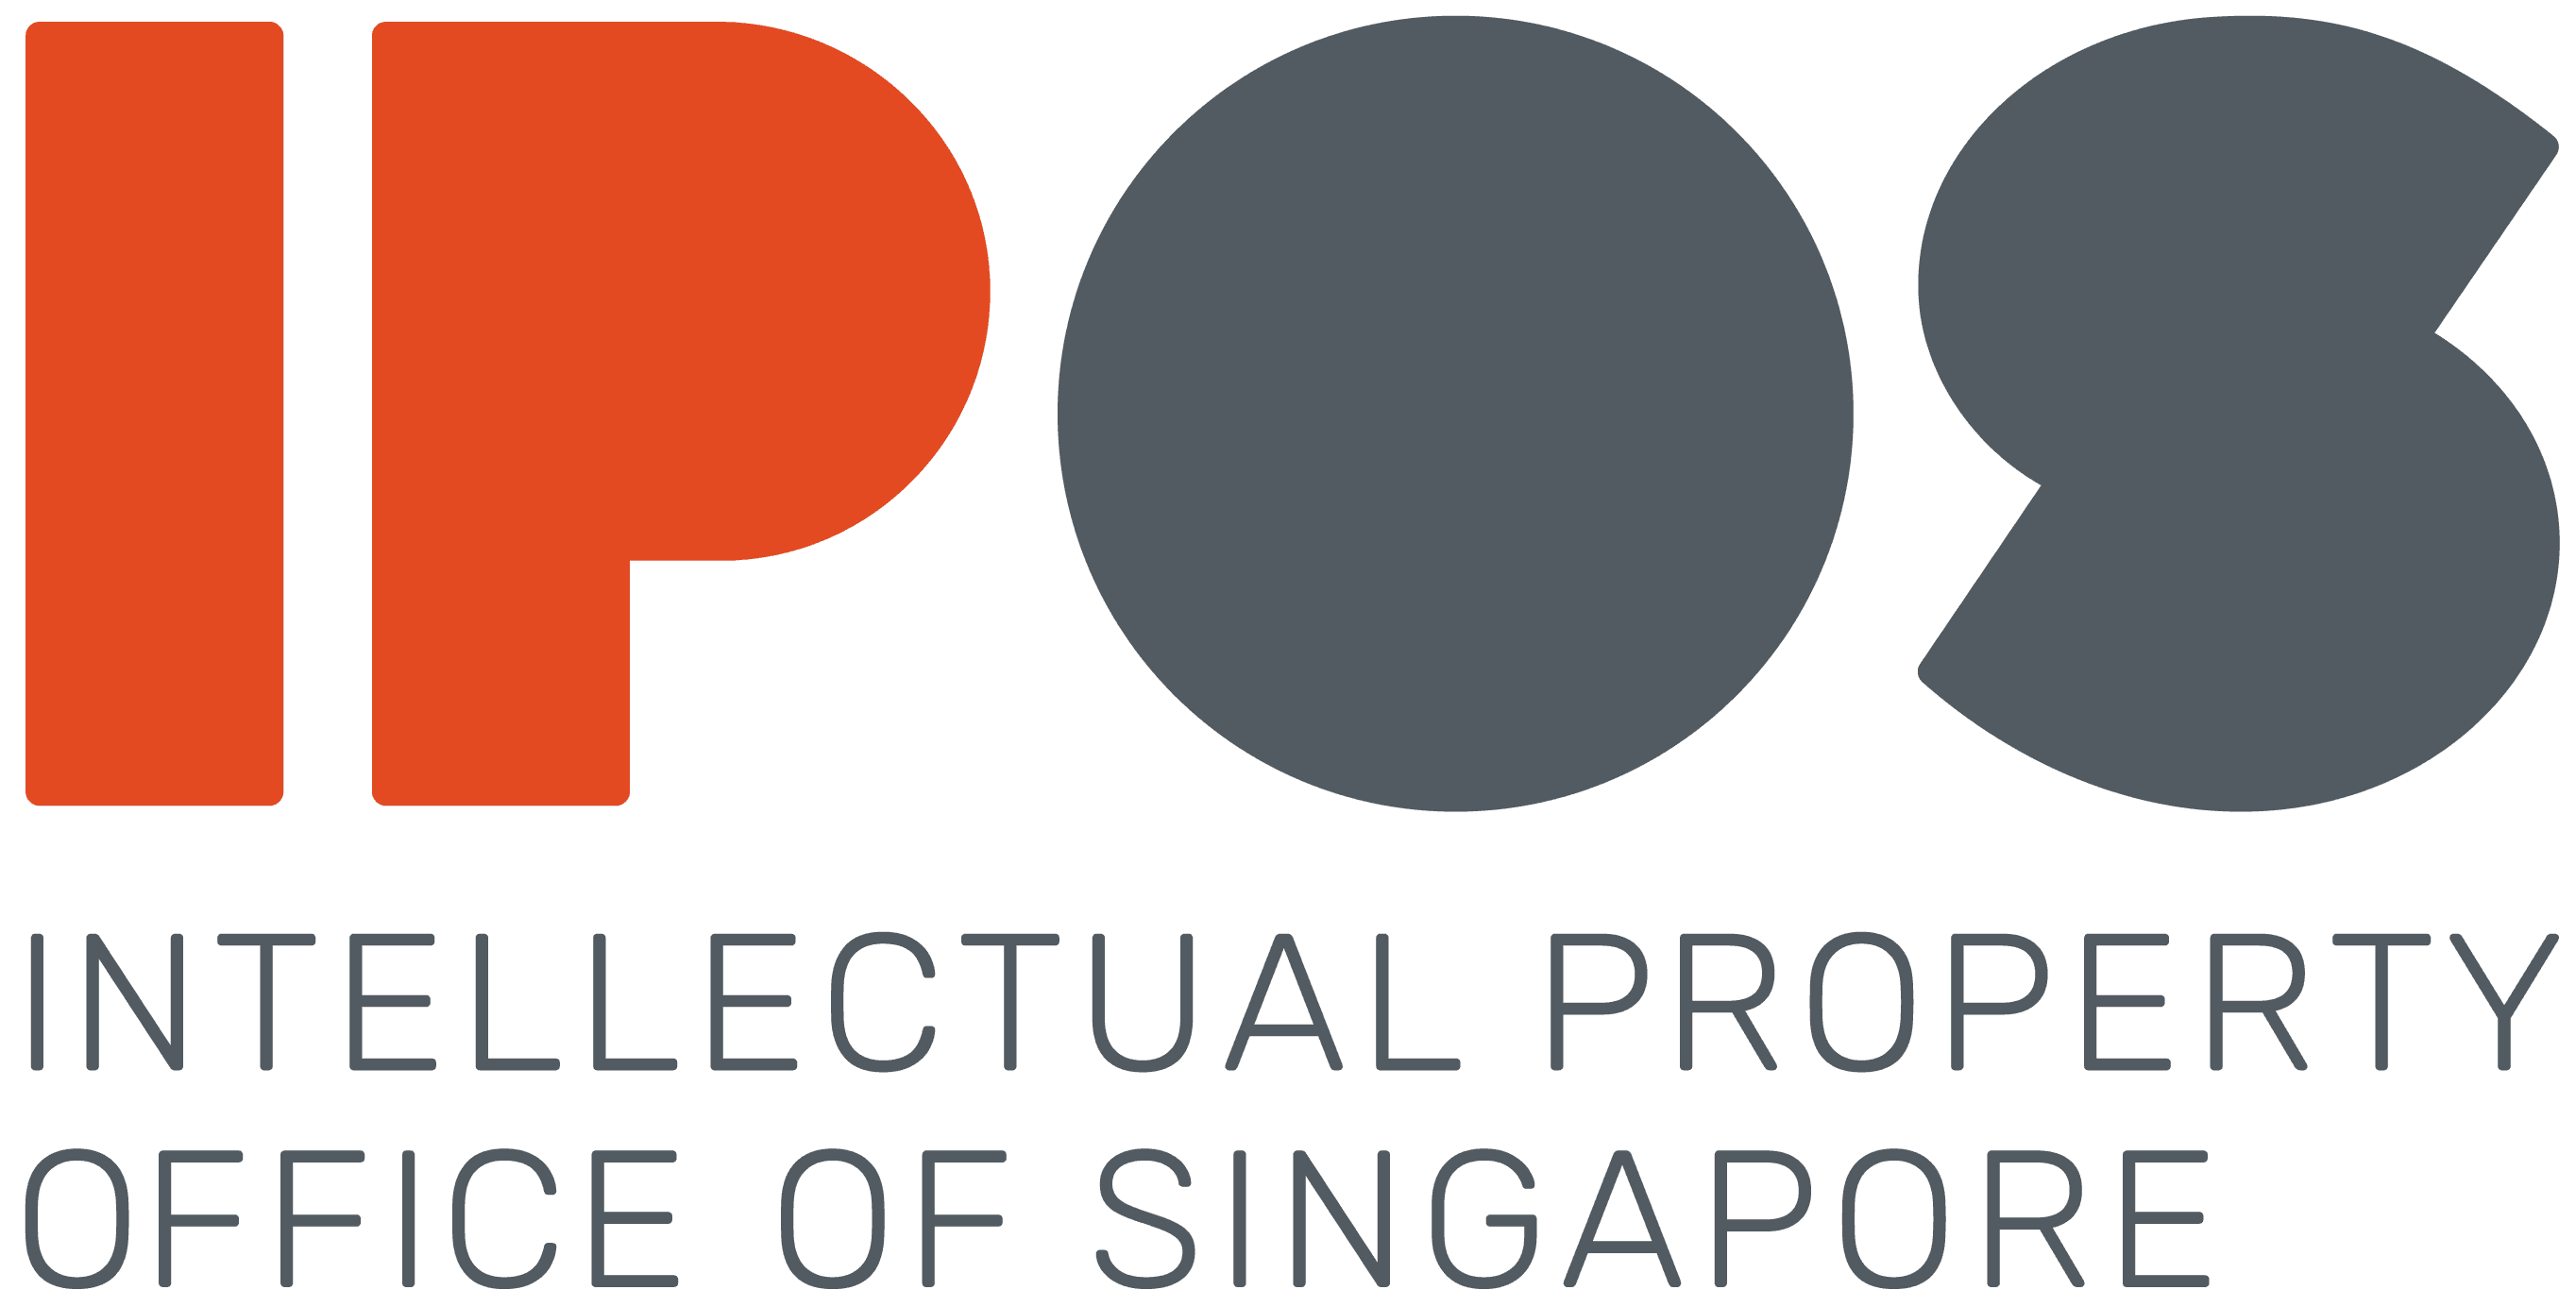 international Intellectual Property Office of Singapore 